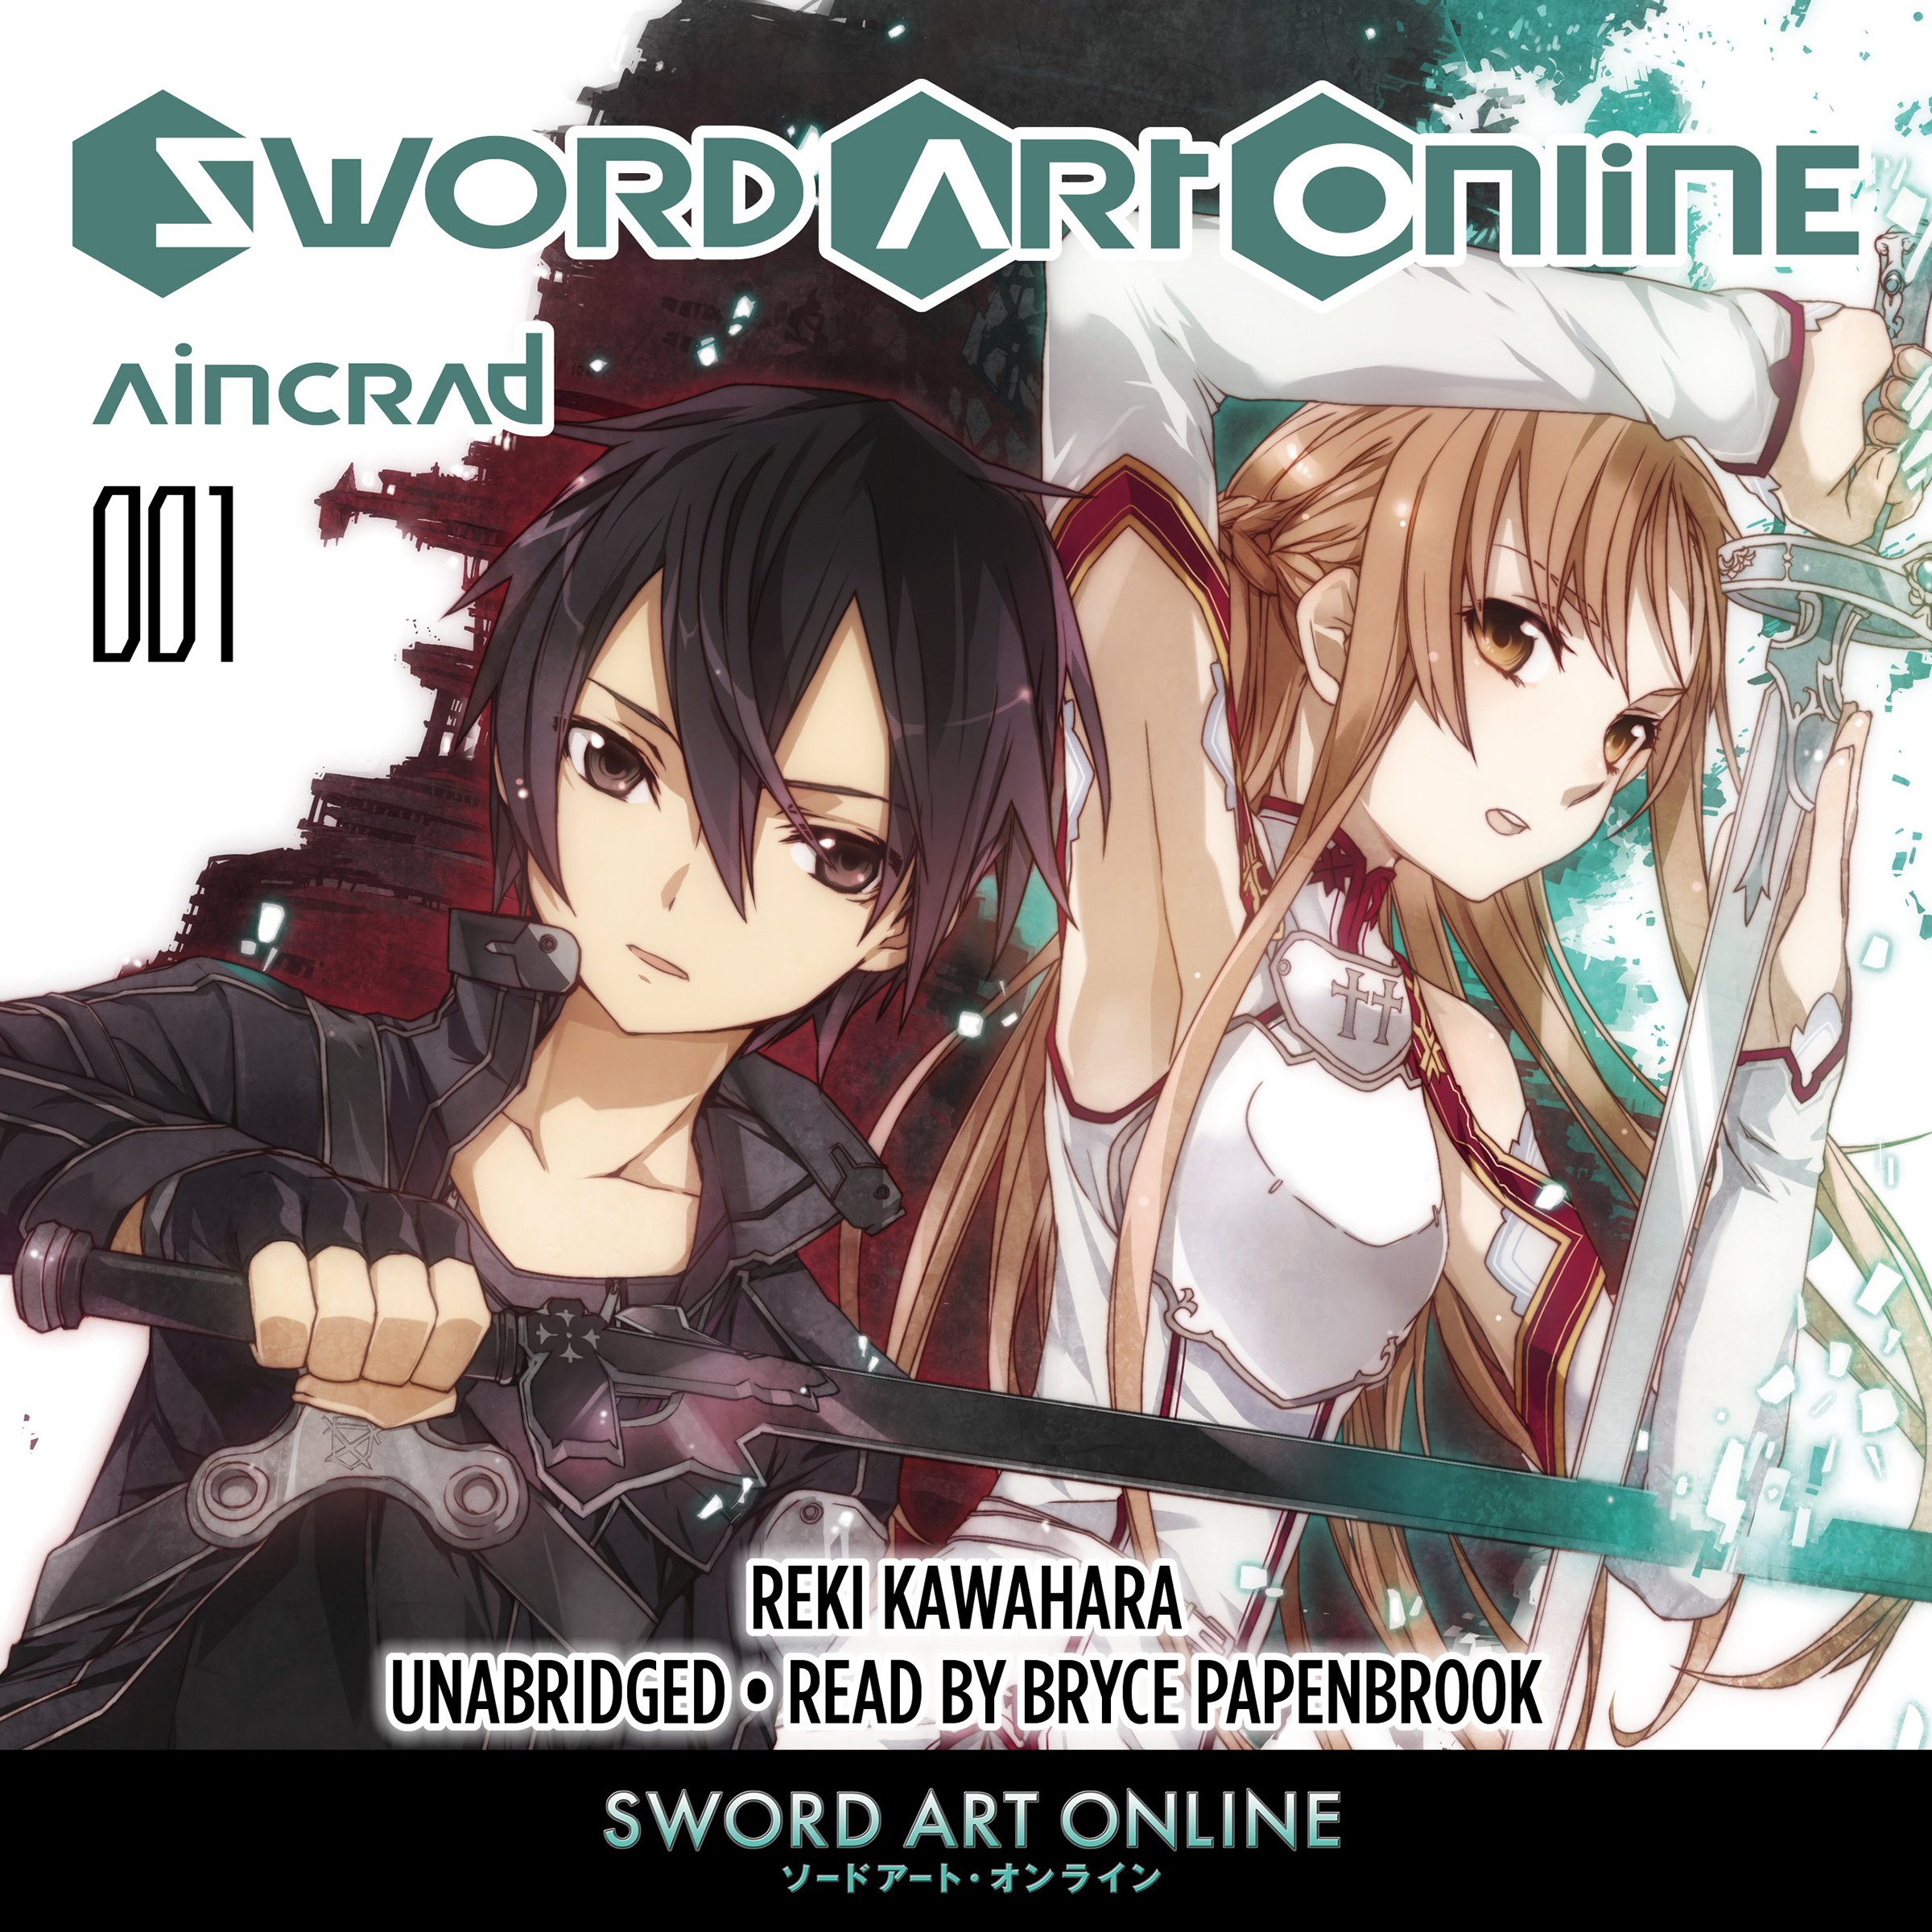 Read Sword Art Online Vol.1 Chapter 1 on Mangakakalot